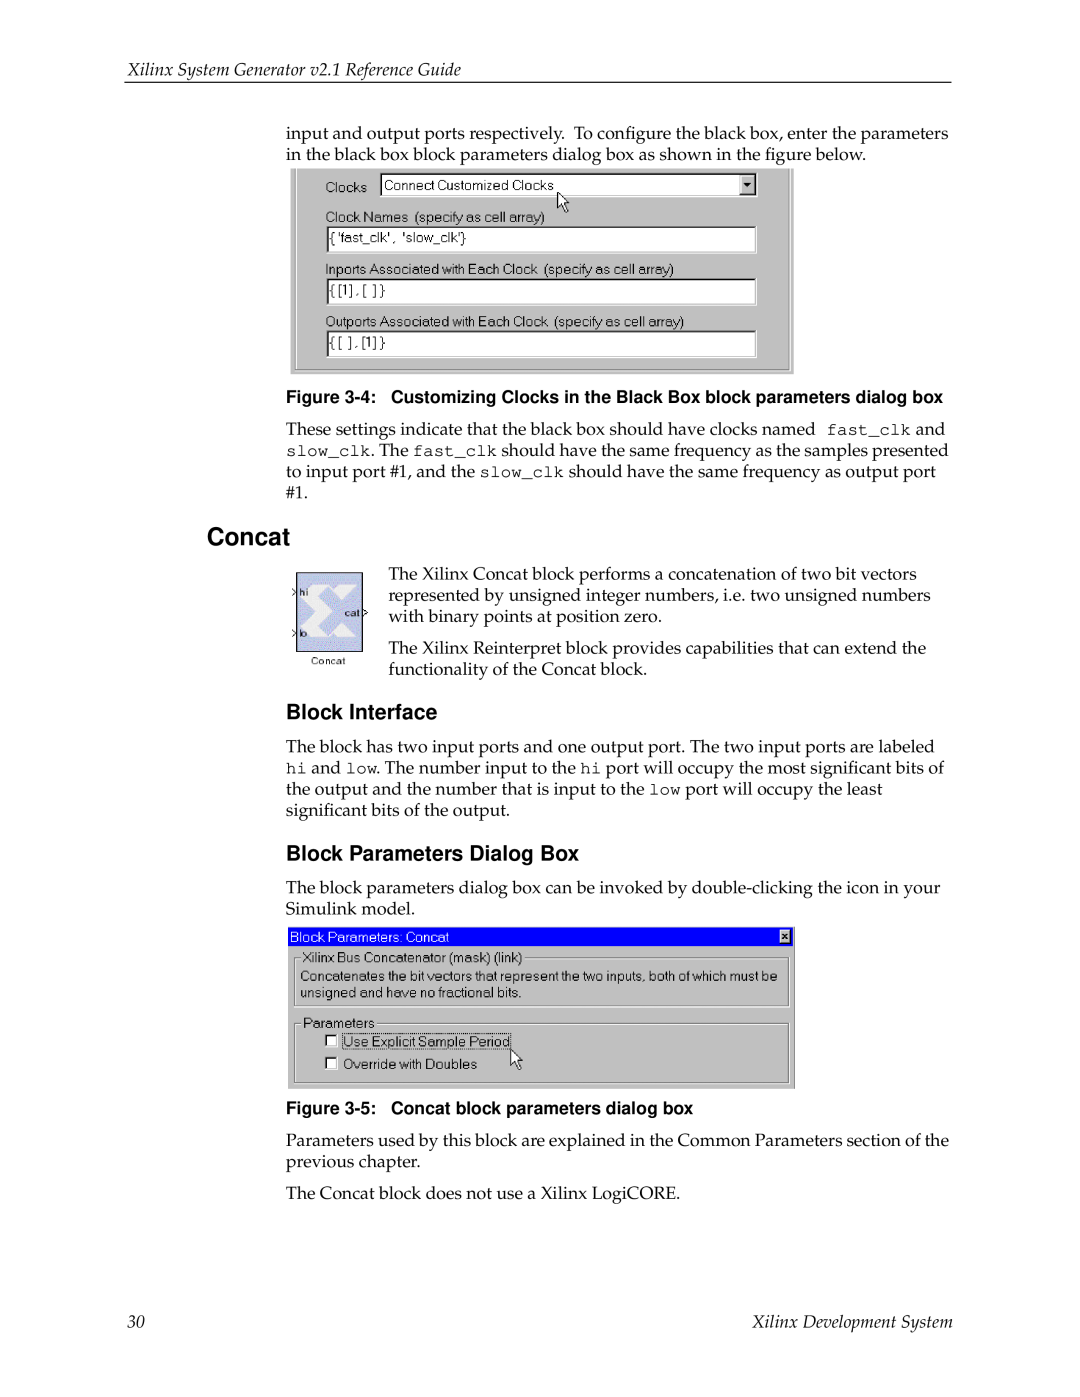 Xilinx V2.1 manual Concat, Block Interface, Block Parameters Dialog Box, Xilinx System Generator v2.1 Reference Guide 